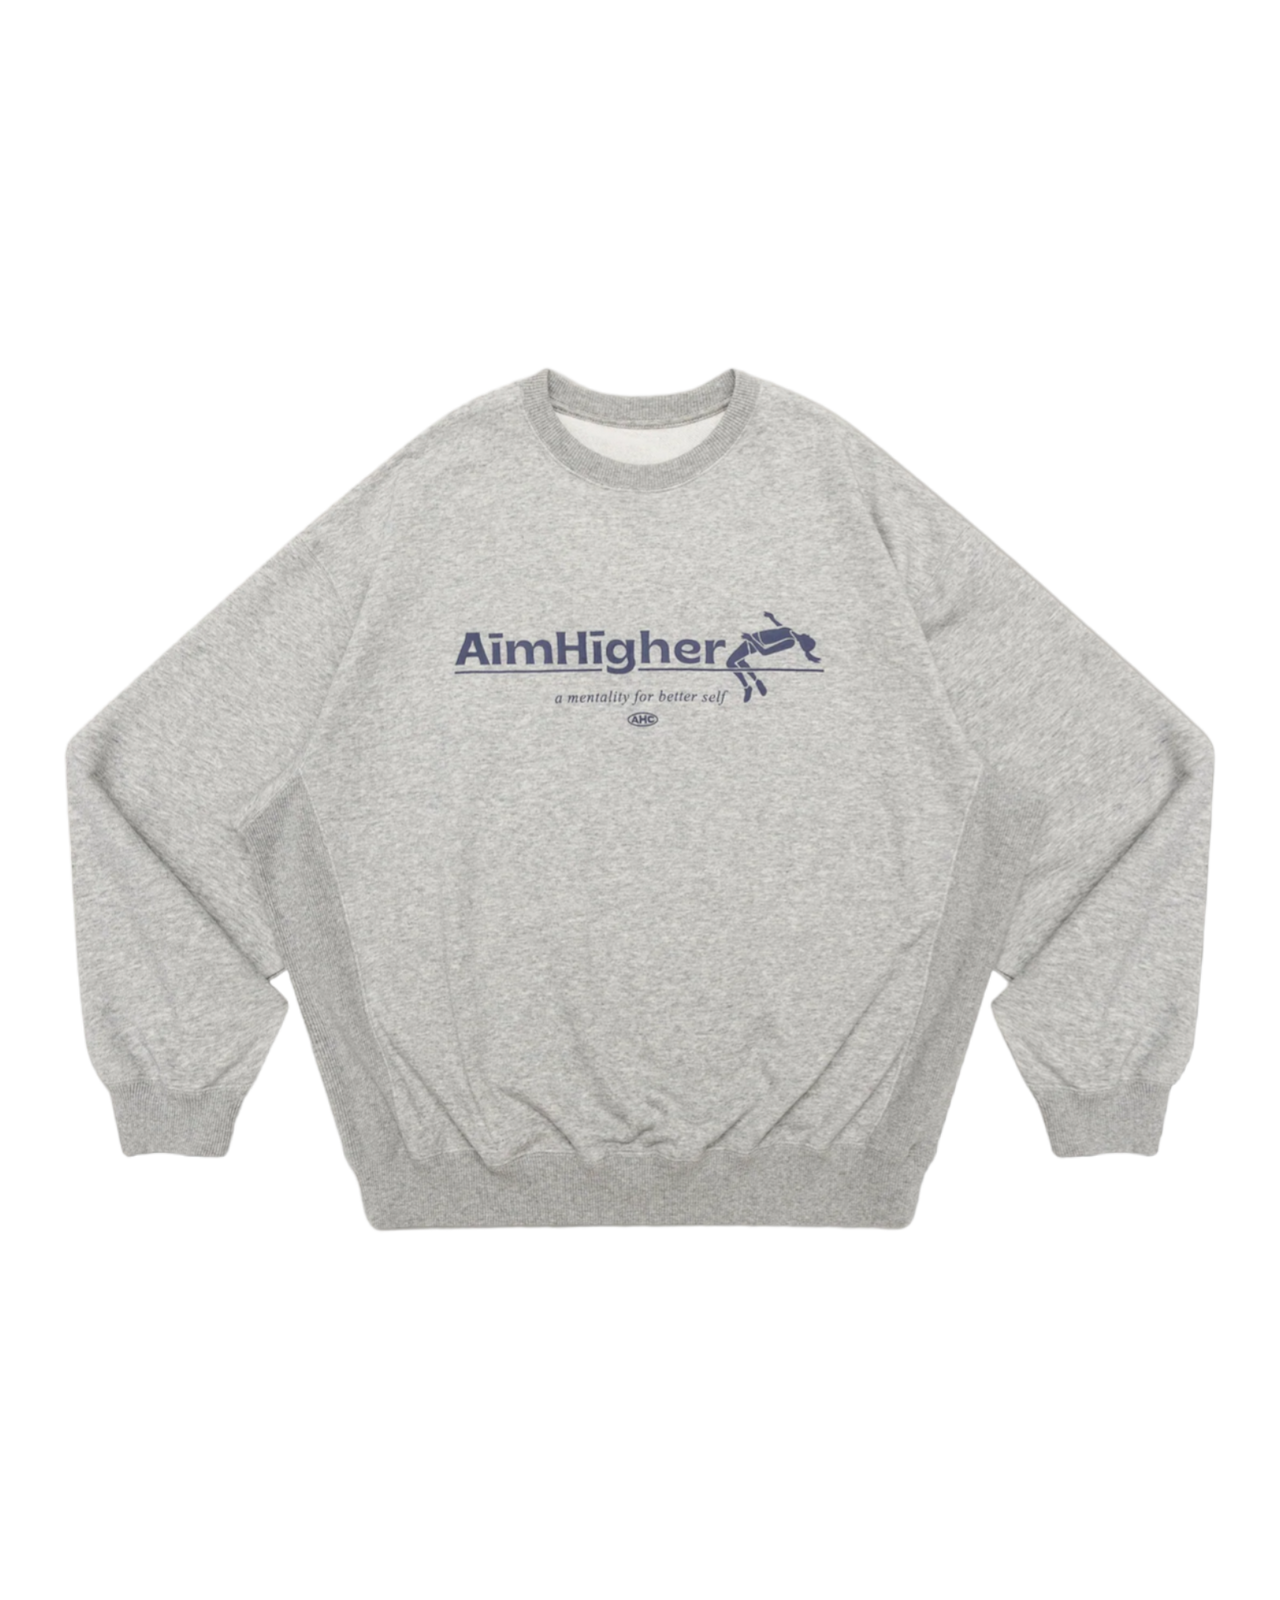 Aim Higher Club Light Sweater In Flecking Grey